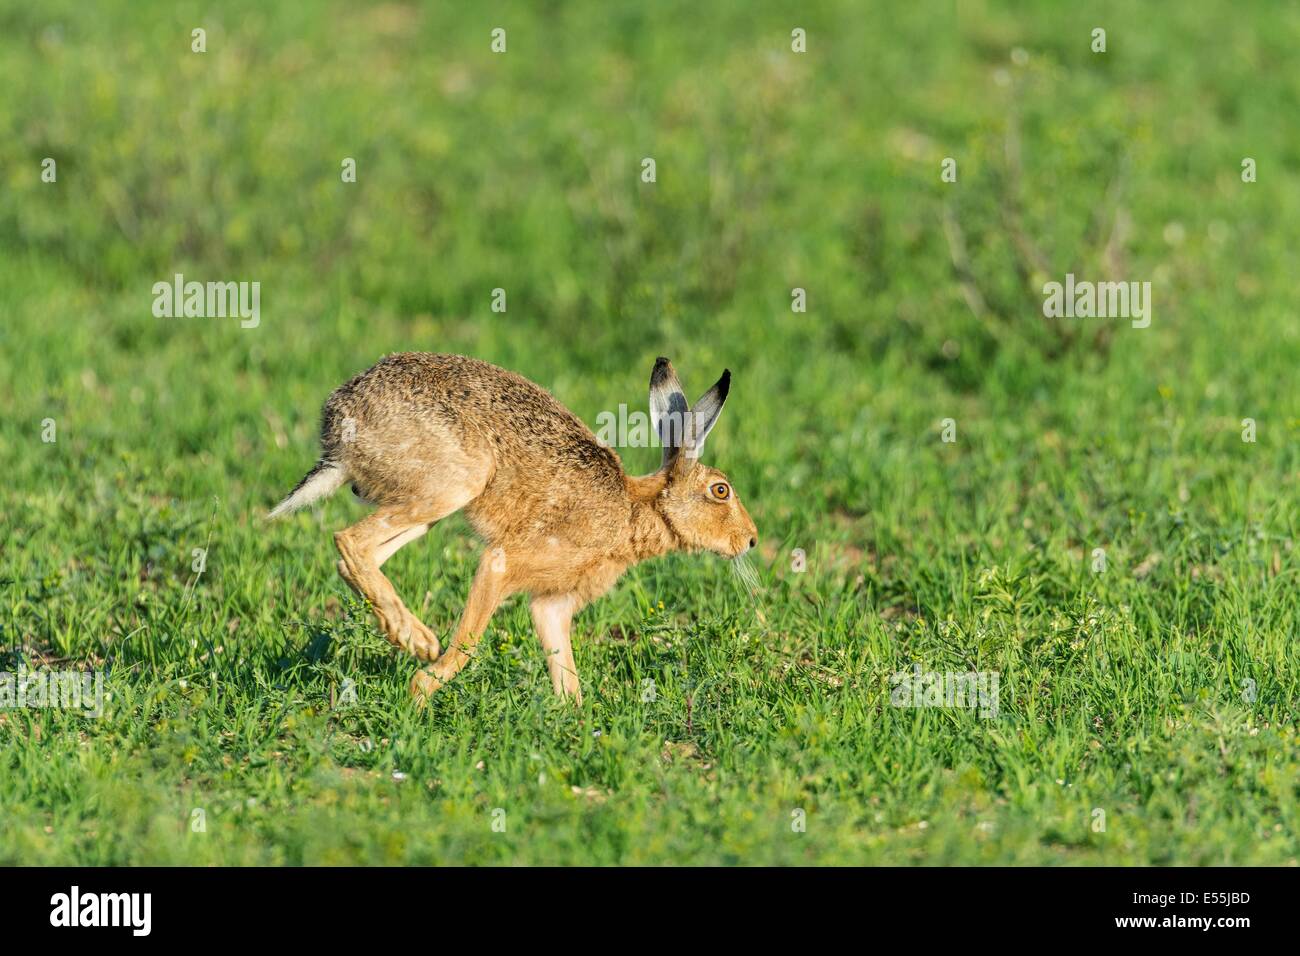 European hare (Lepus europaeus), running across grass headland, England, July Stock Photo